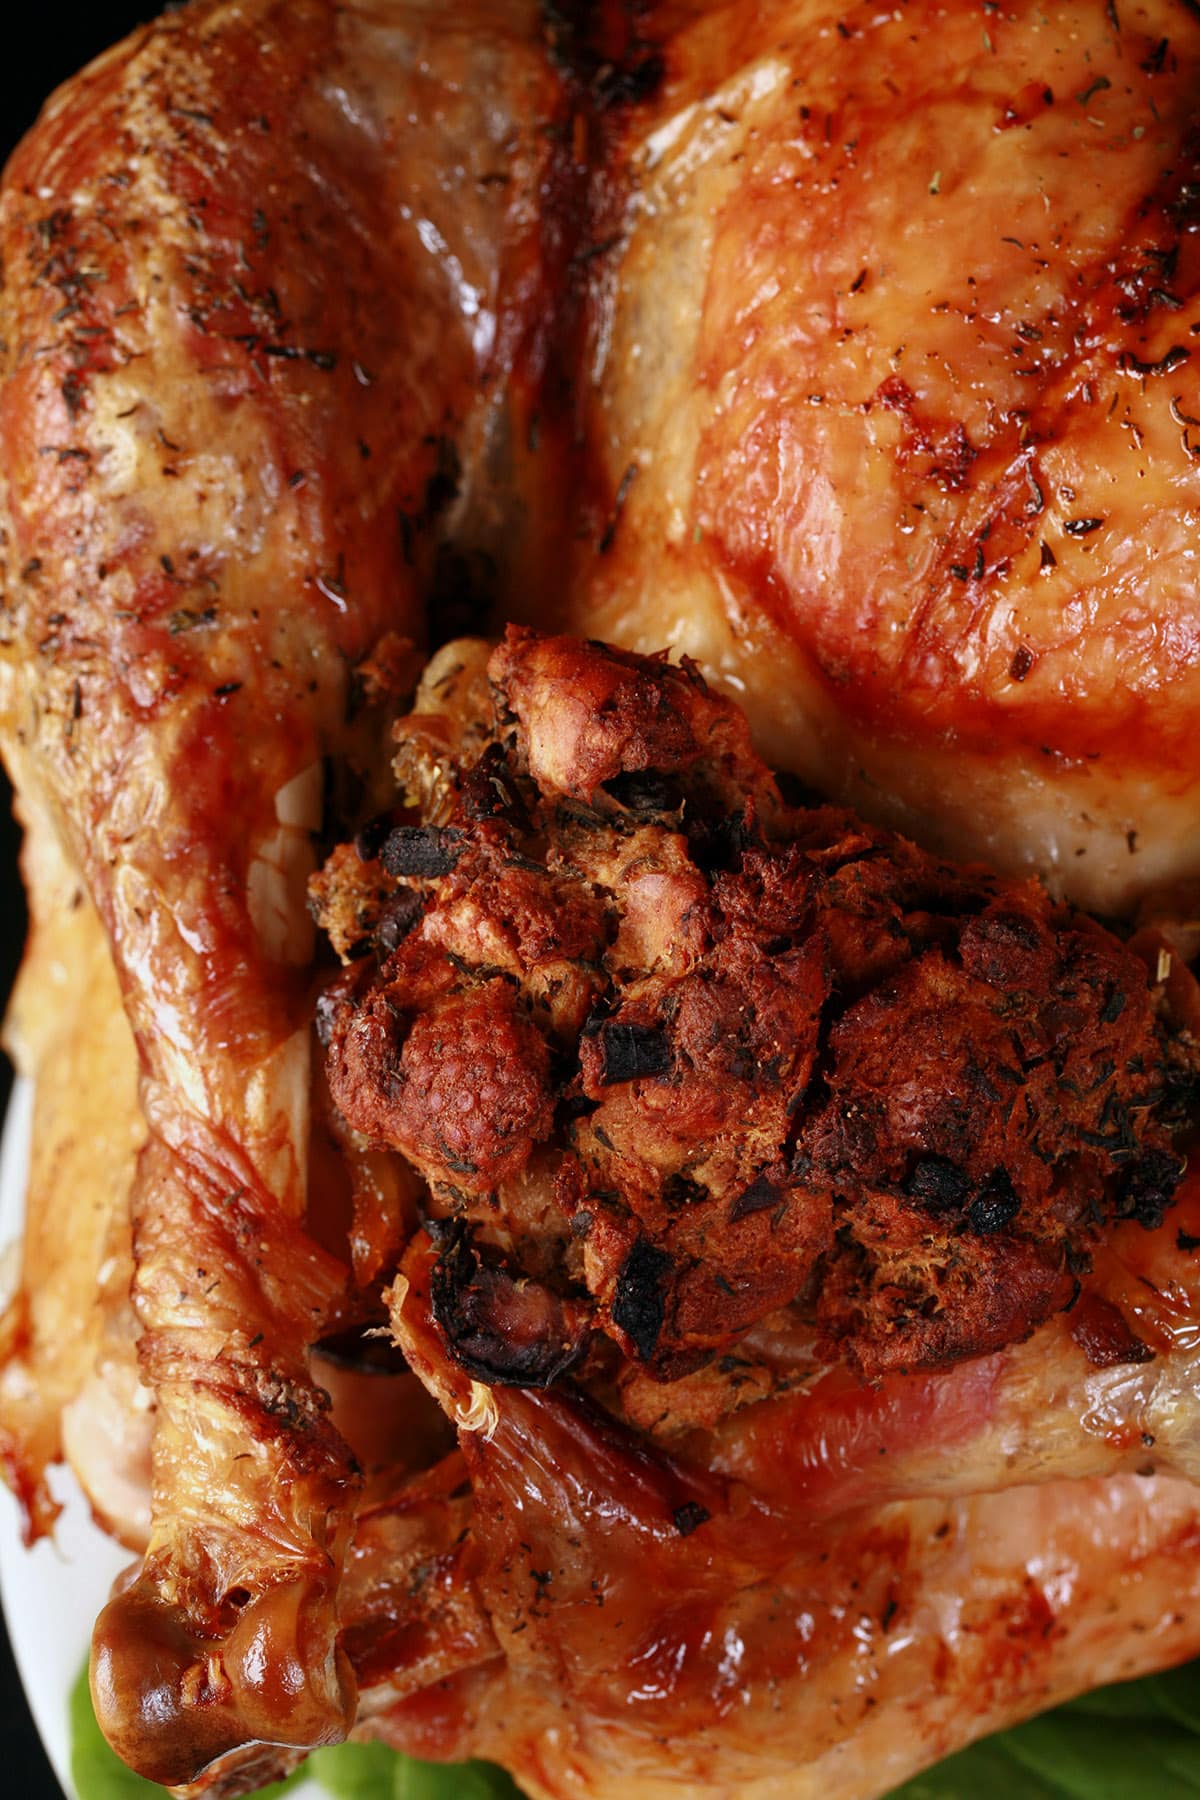 A close up view of a roasted stuffed turkey